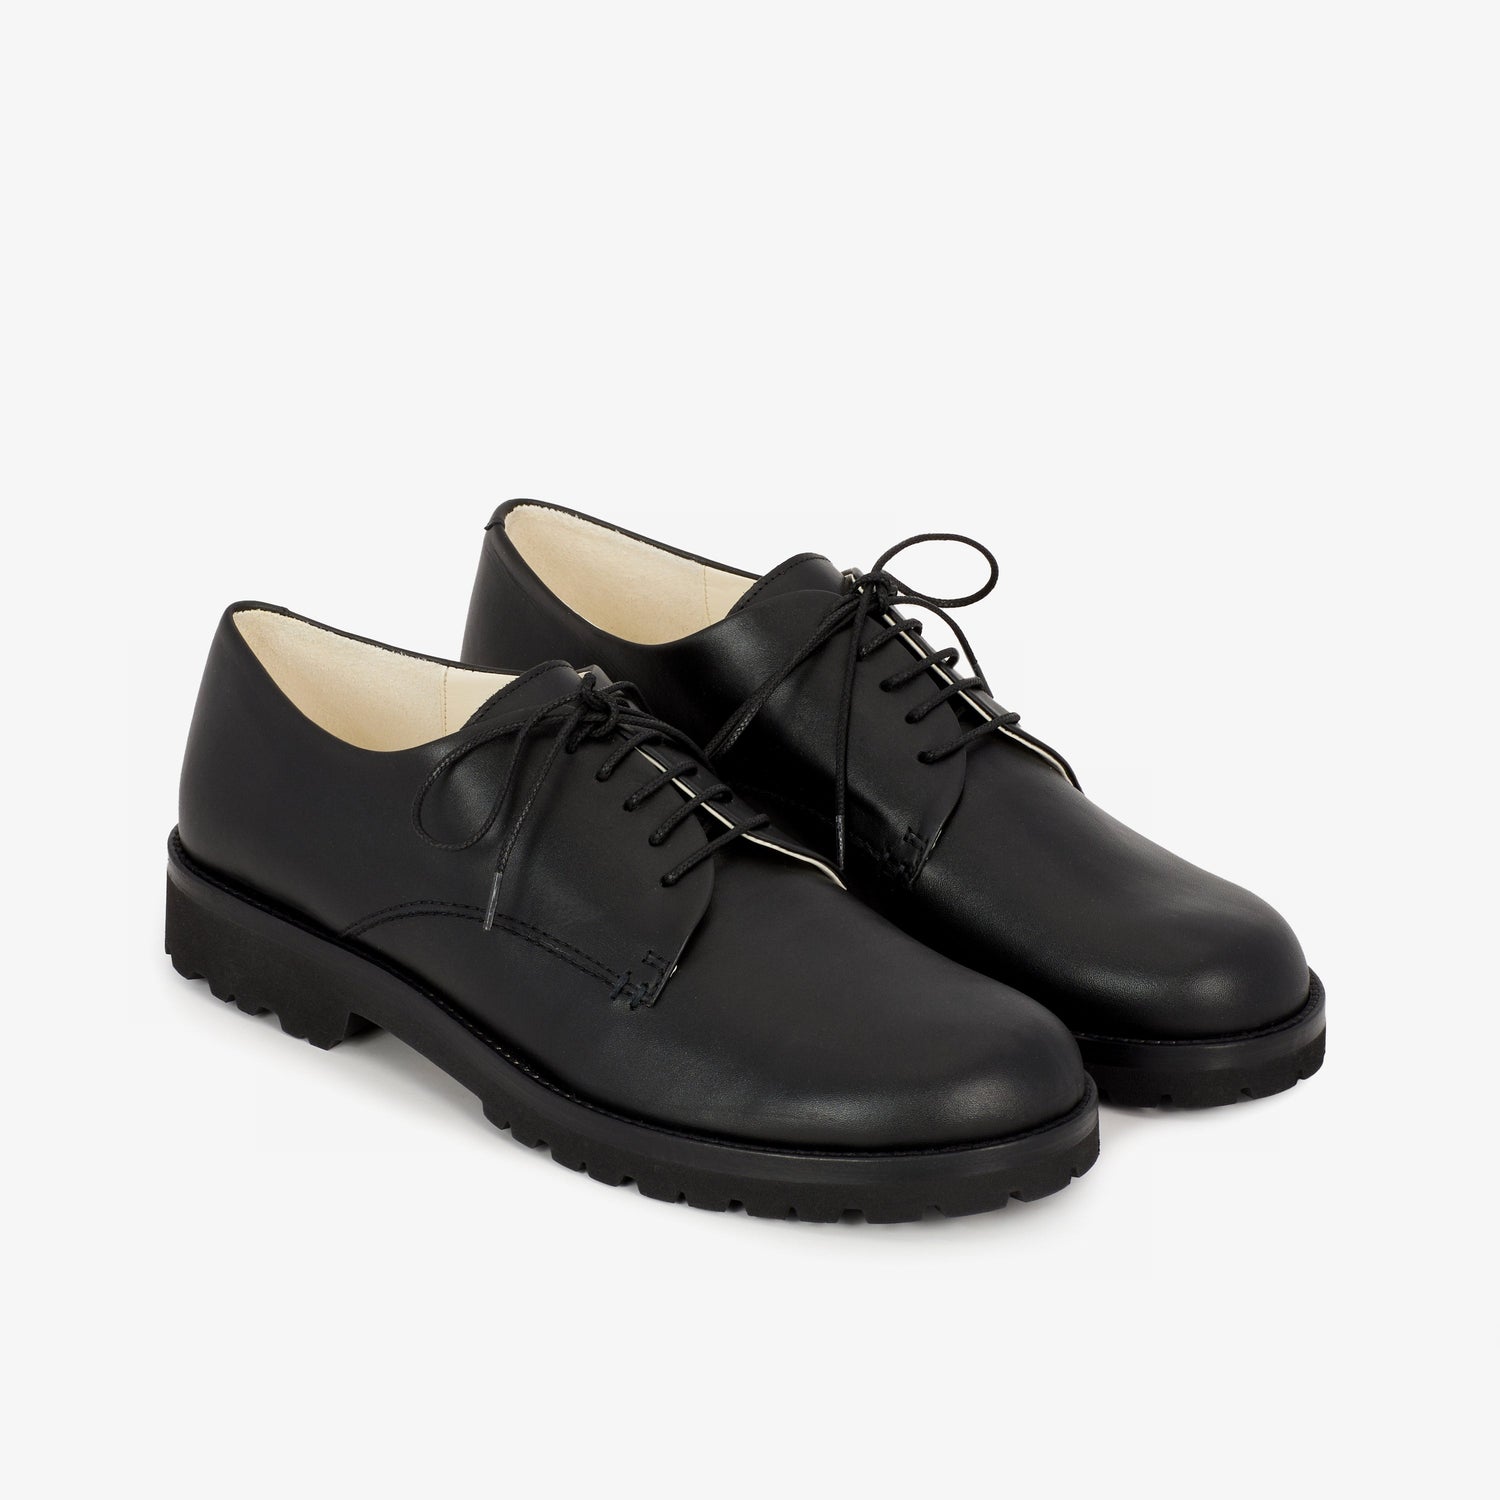 Mr. Derby Shoe Black